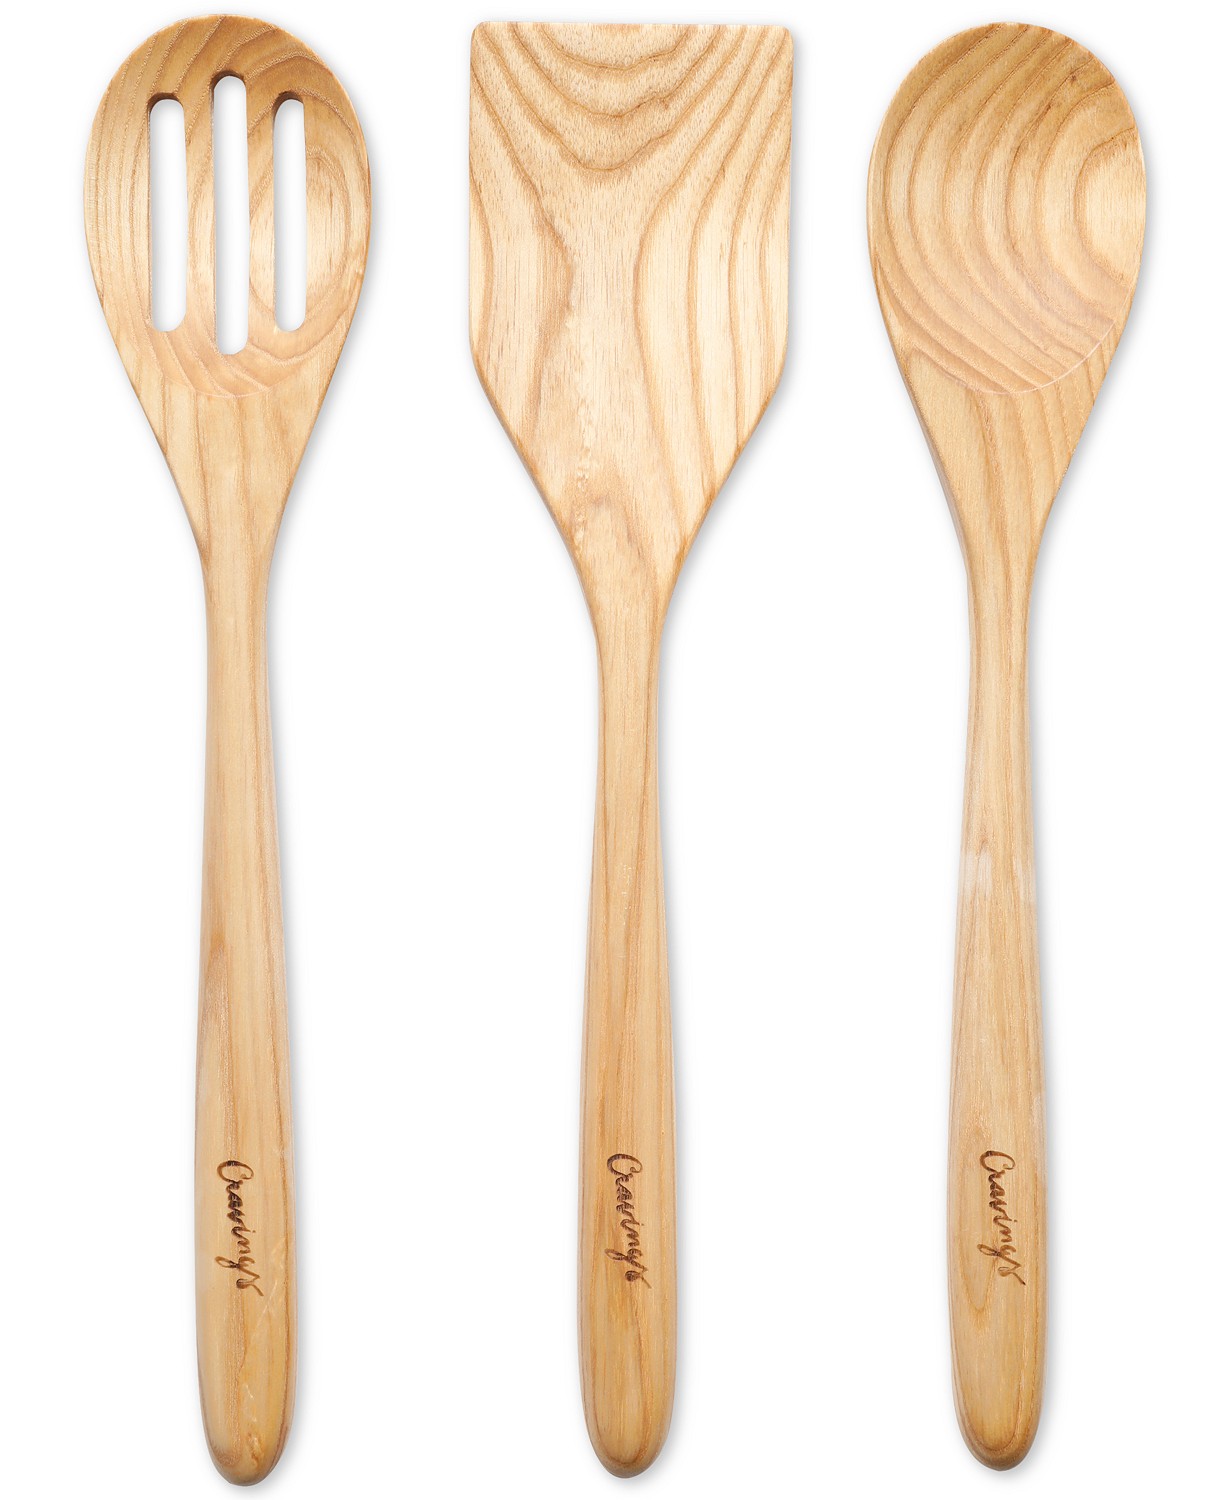 Wood Kitchen Tools, Set of 3